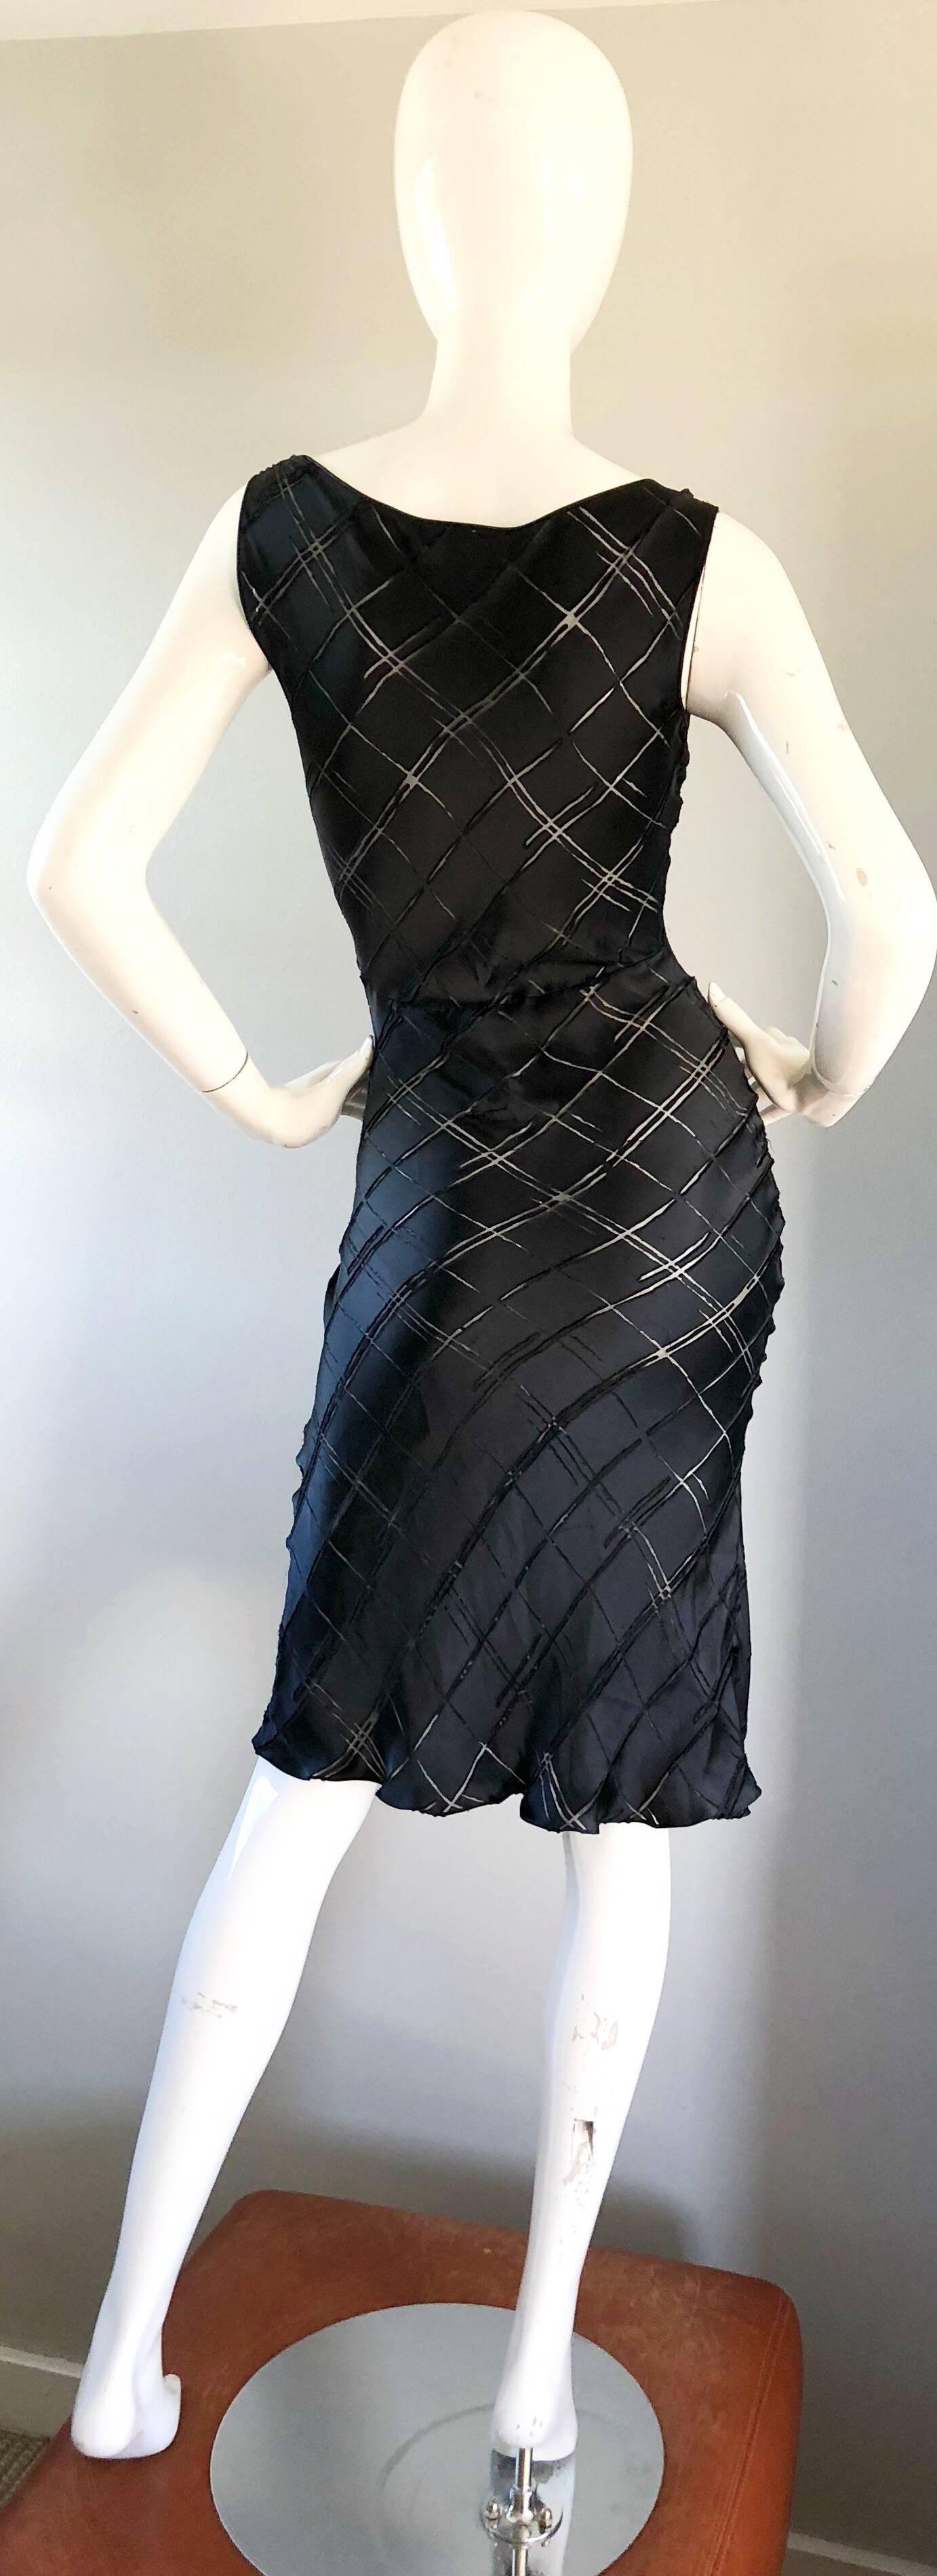 Rare Early John Galliano 1990s Black + Sheer Panels Black Silk Bias Cut Dress 1